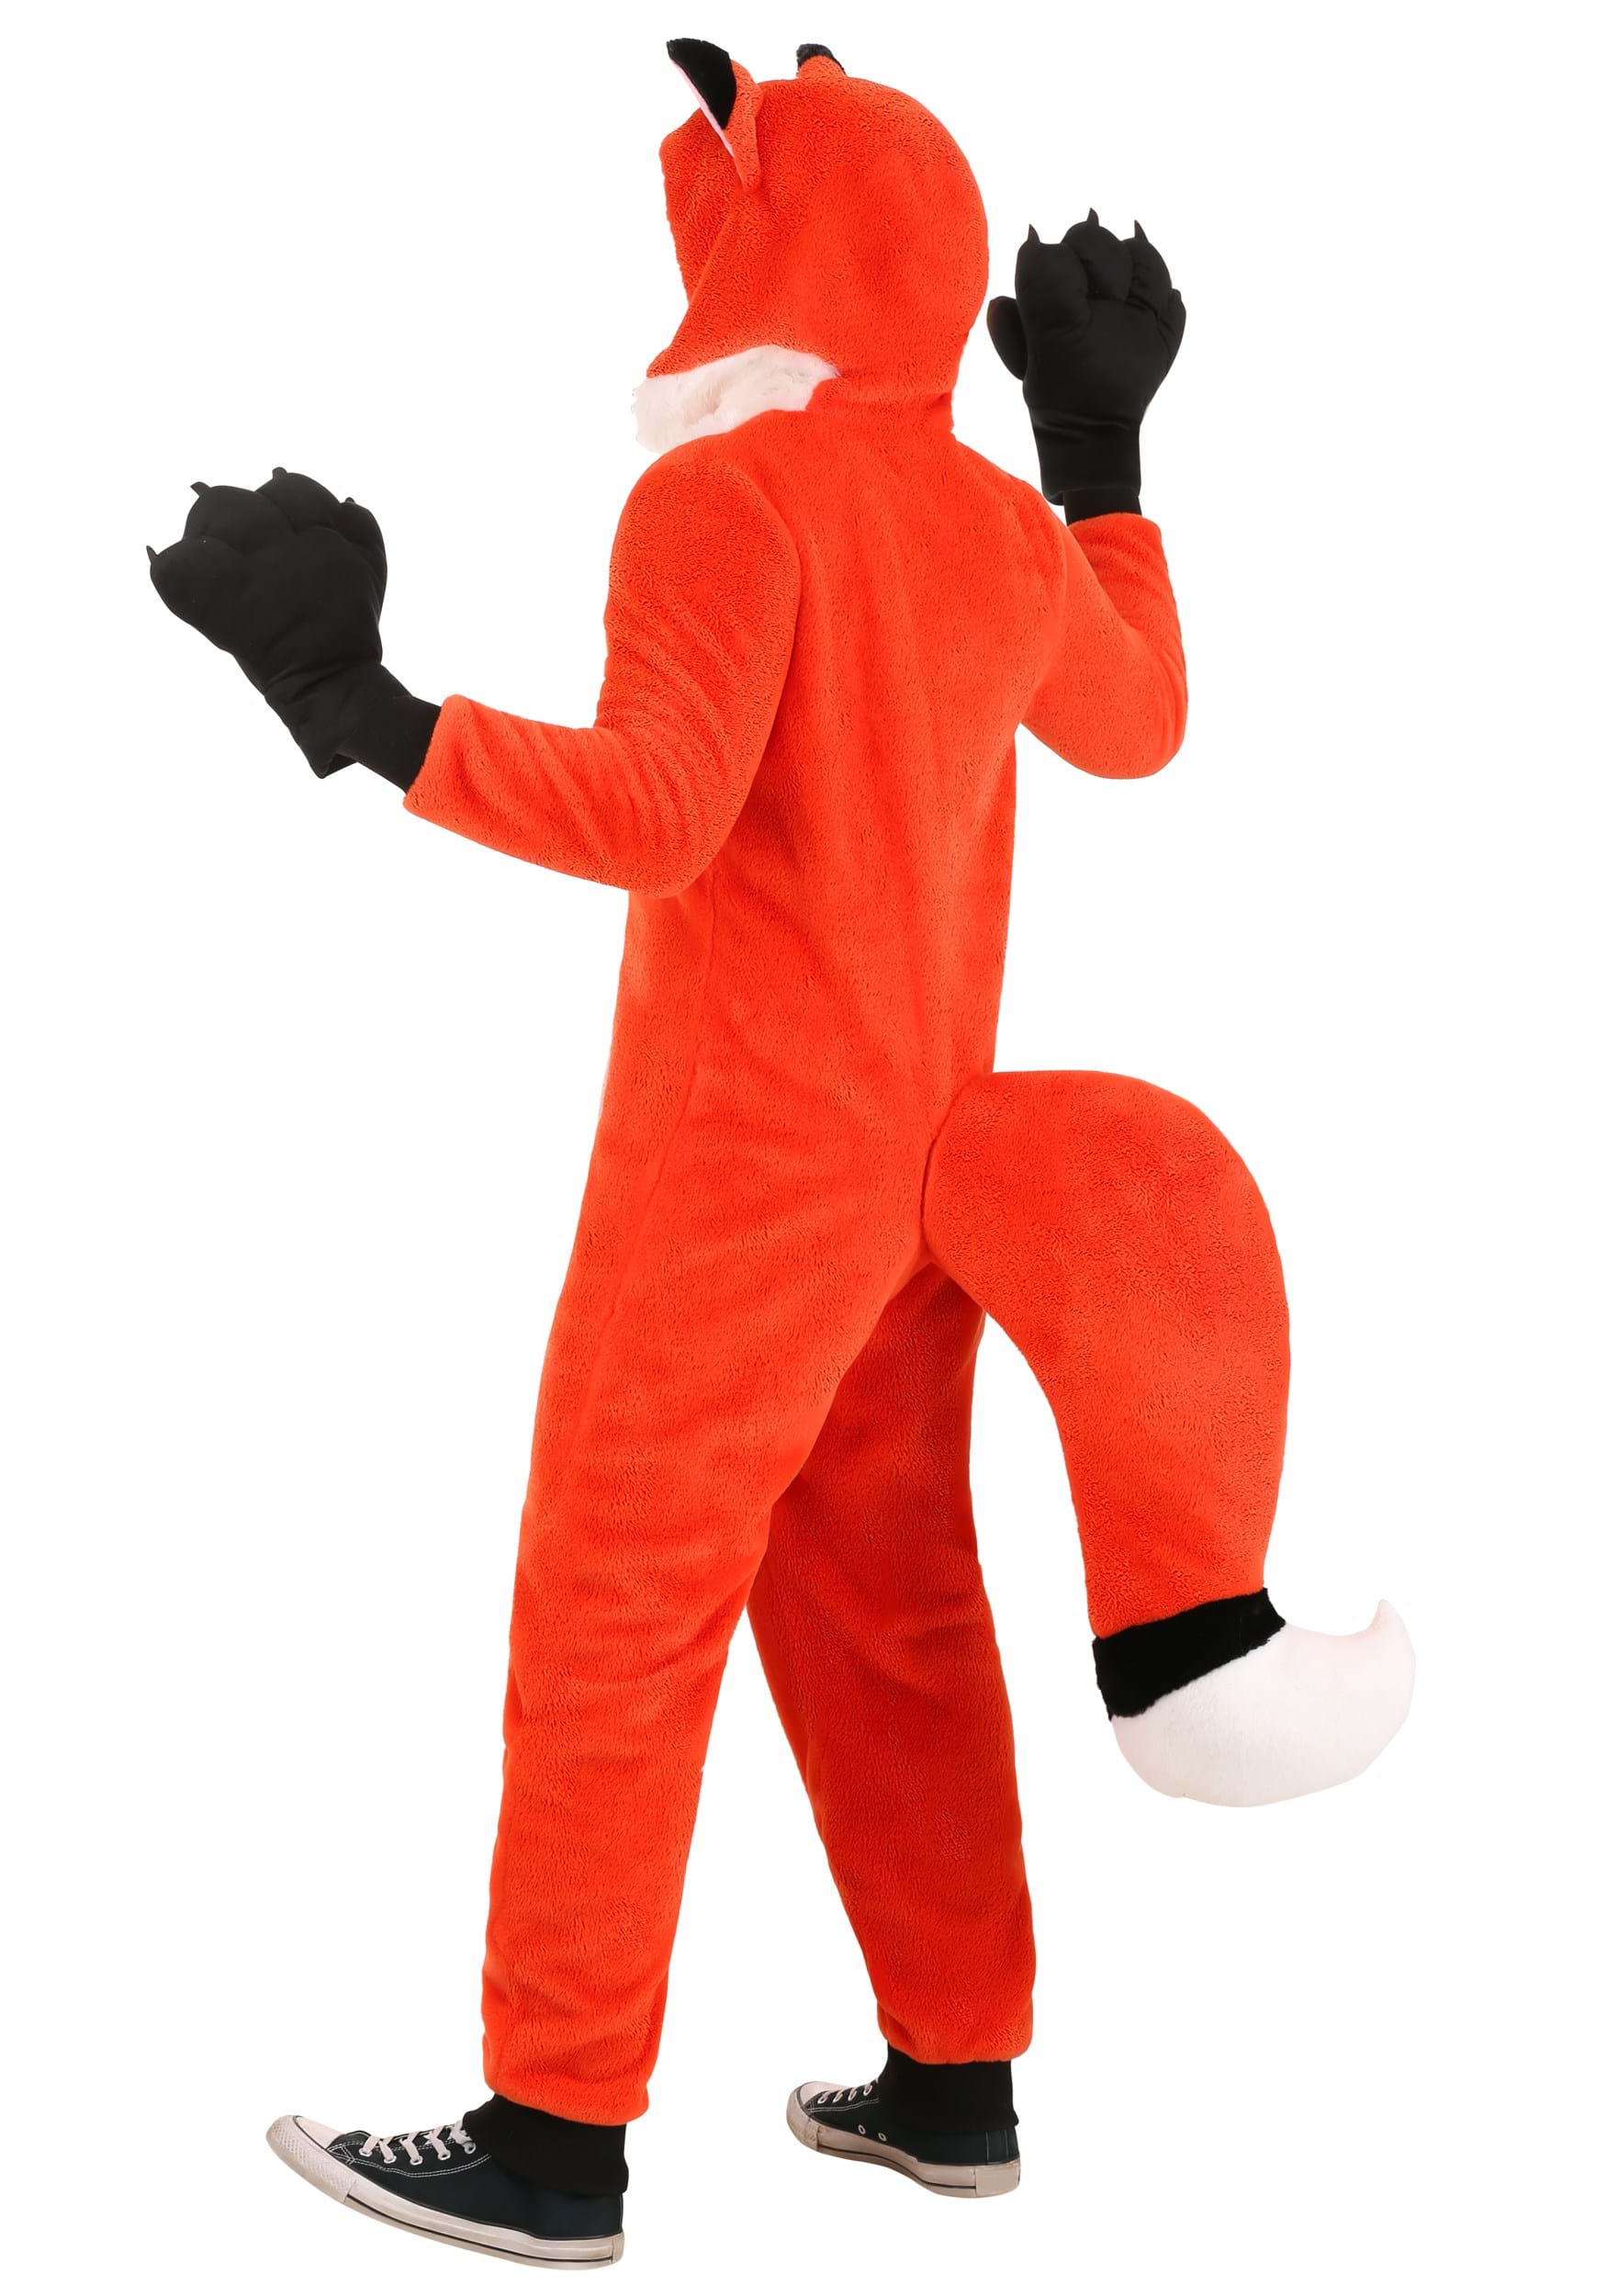 Woodsy Fox Adult Costume